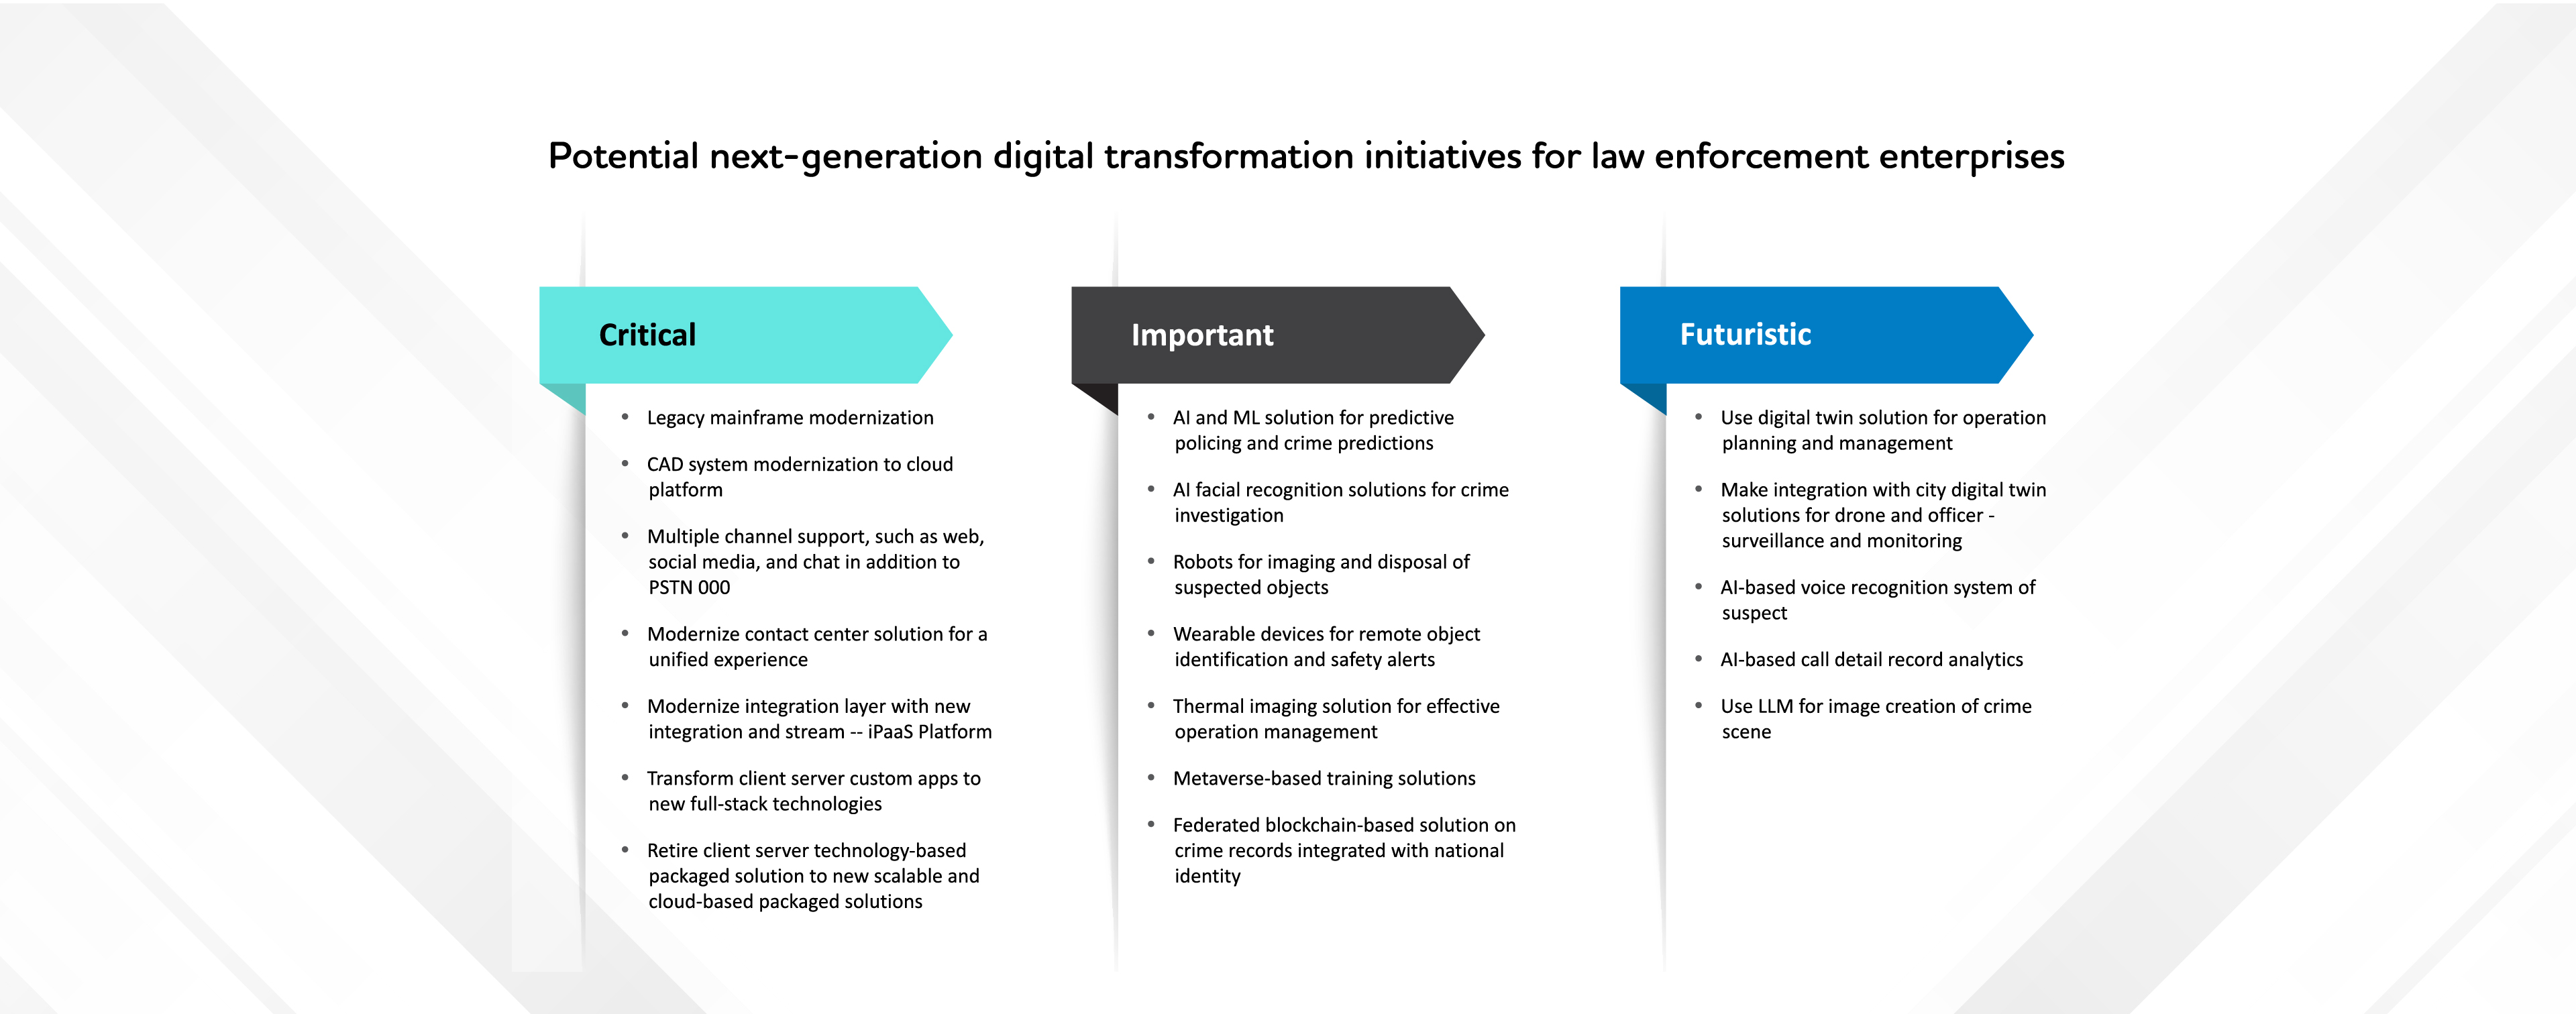 Figure 1: Potential digital transformation initiatives for law enforcement organizations